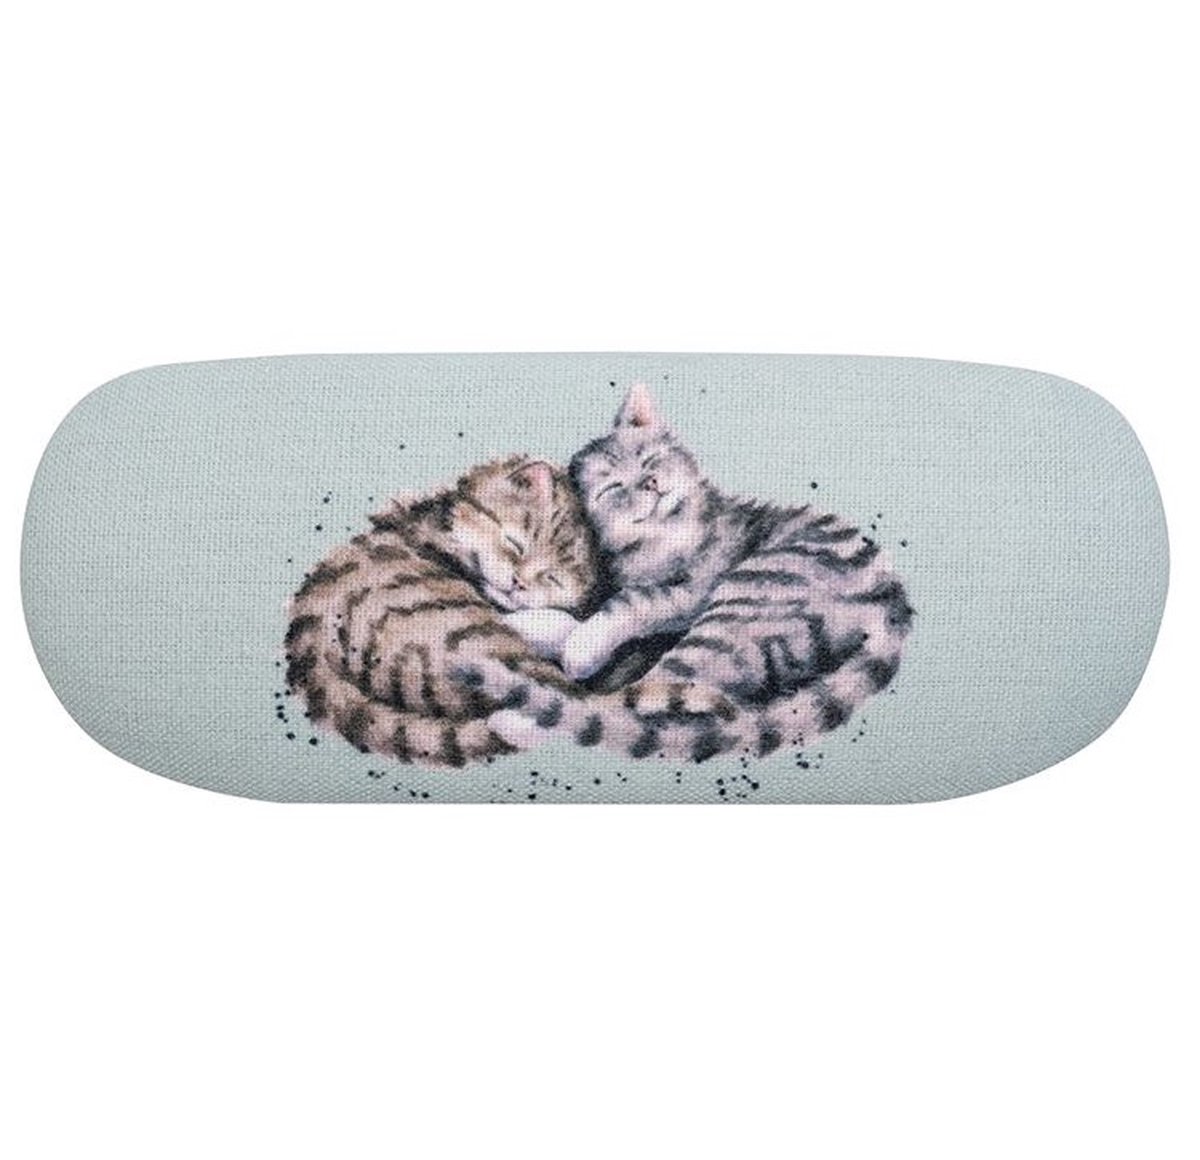 Brillenkoker Wrendale - 'Sweet Dreams' Cat Glasses Case - Brillenhoes Kat